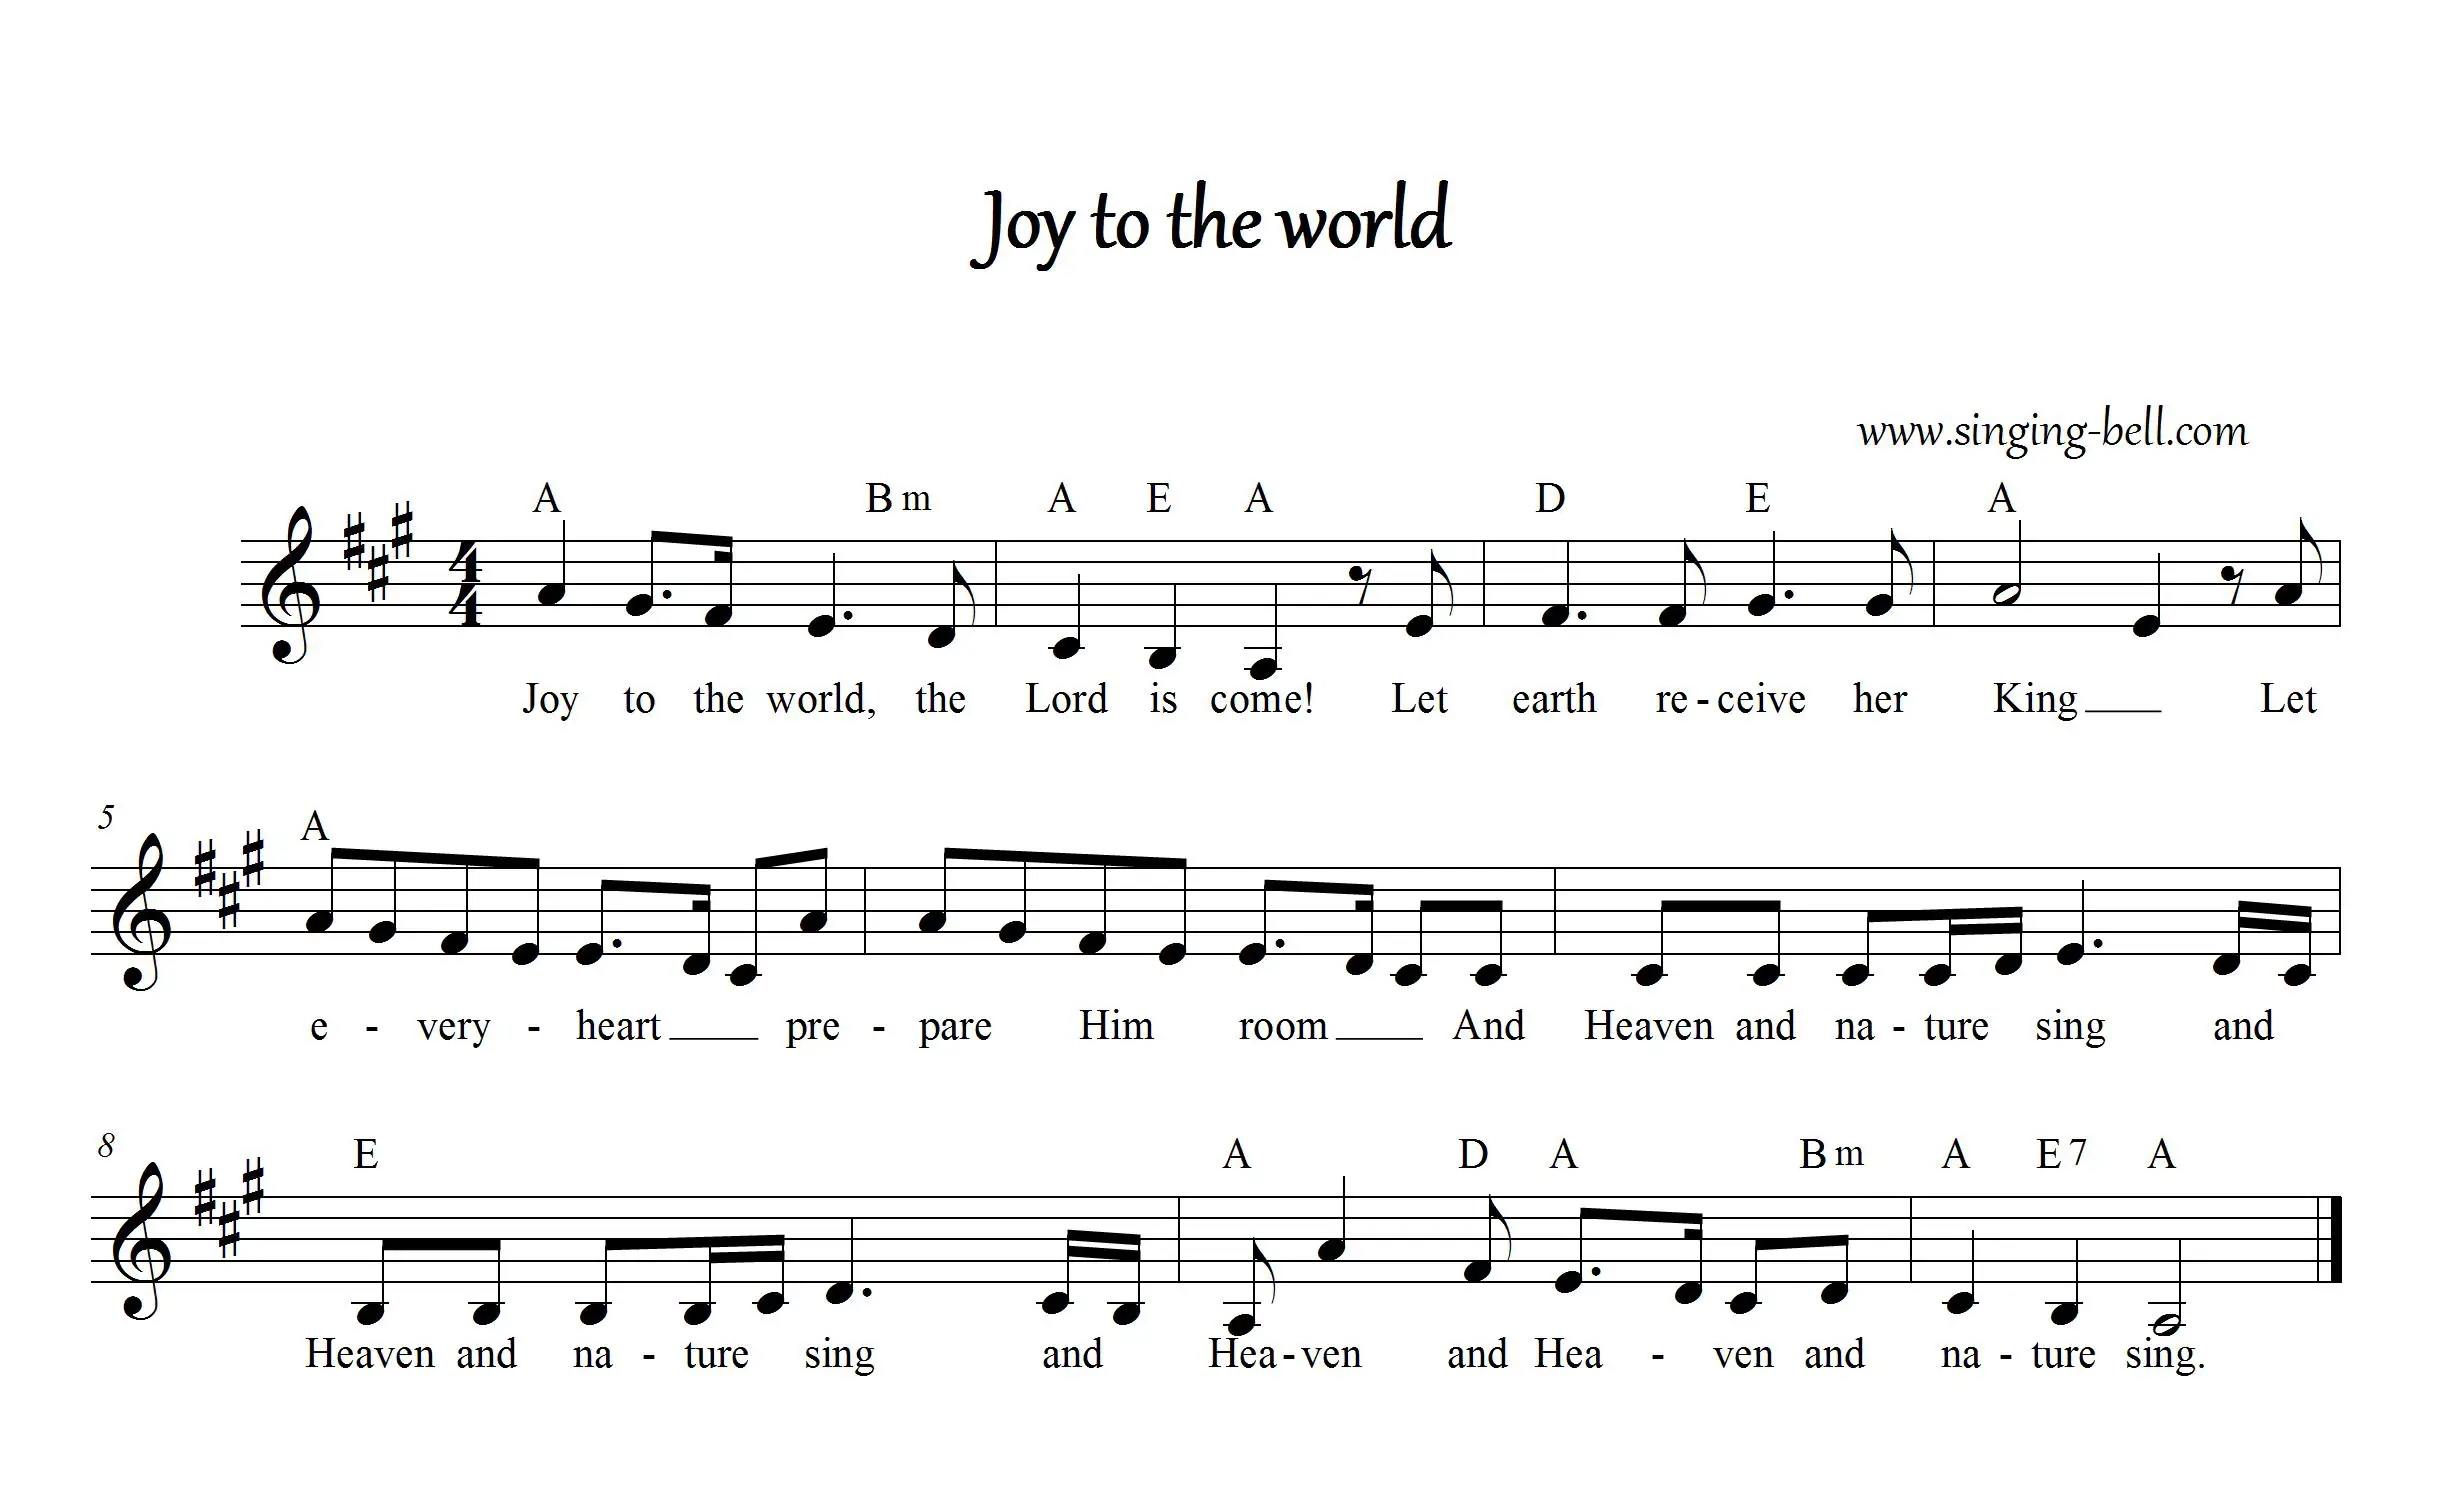 Free Christmas Carols > Joy to the world - free mp3 audio download